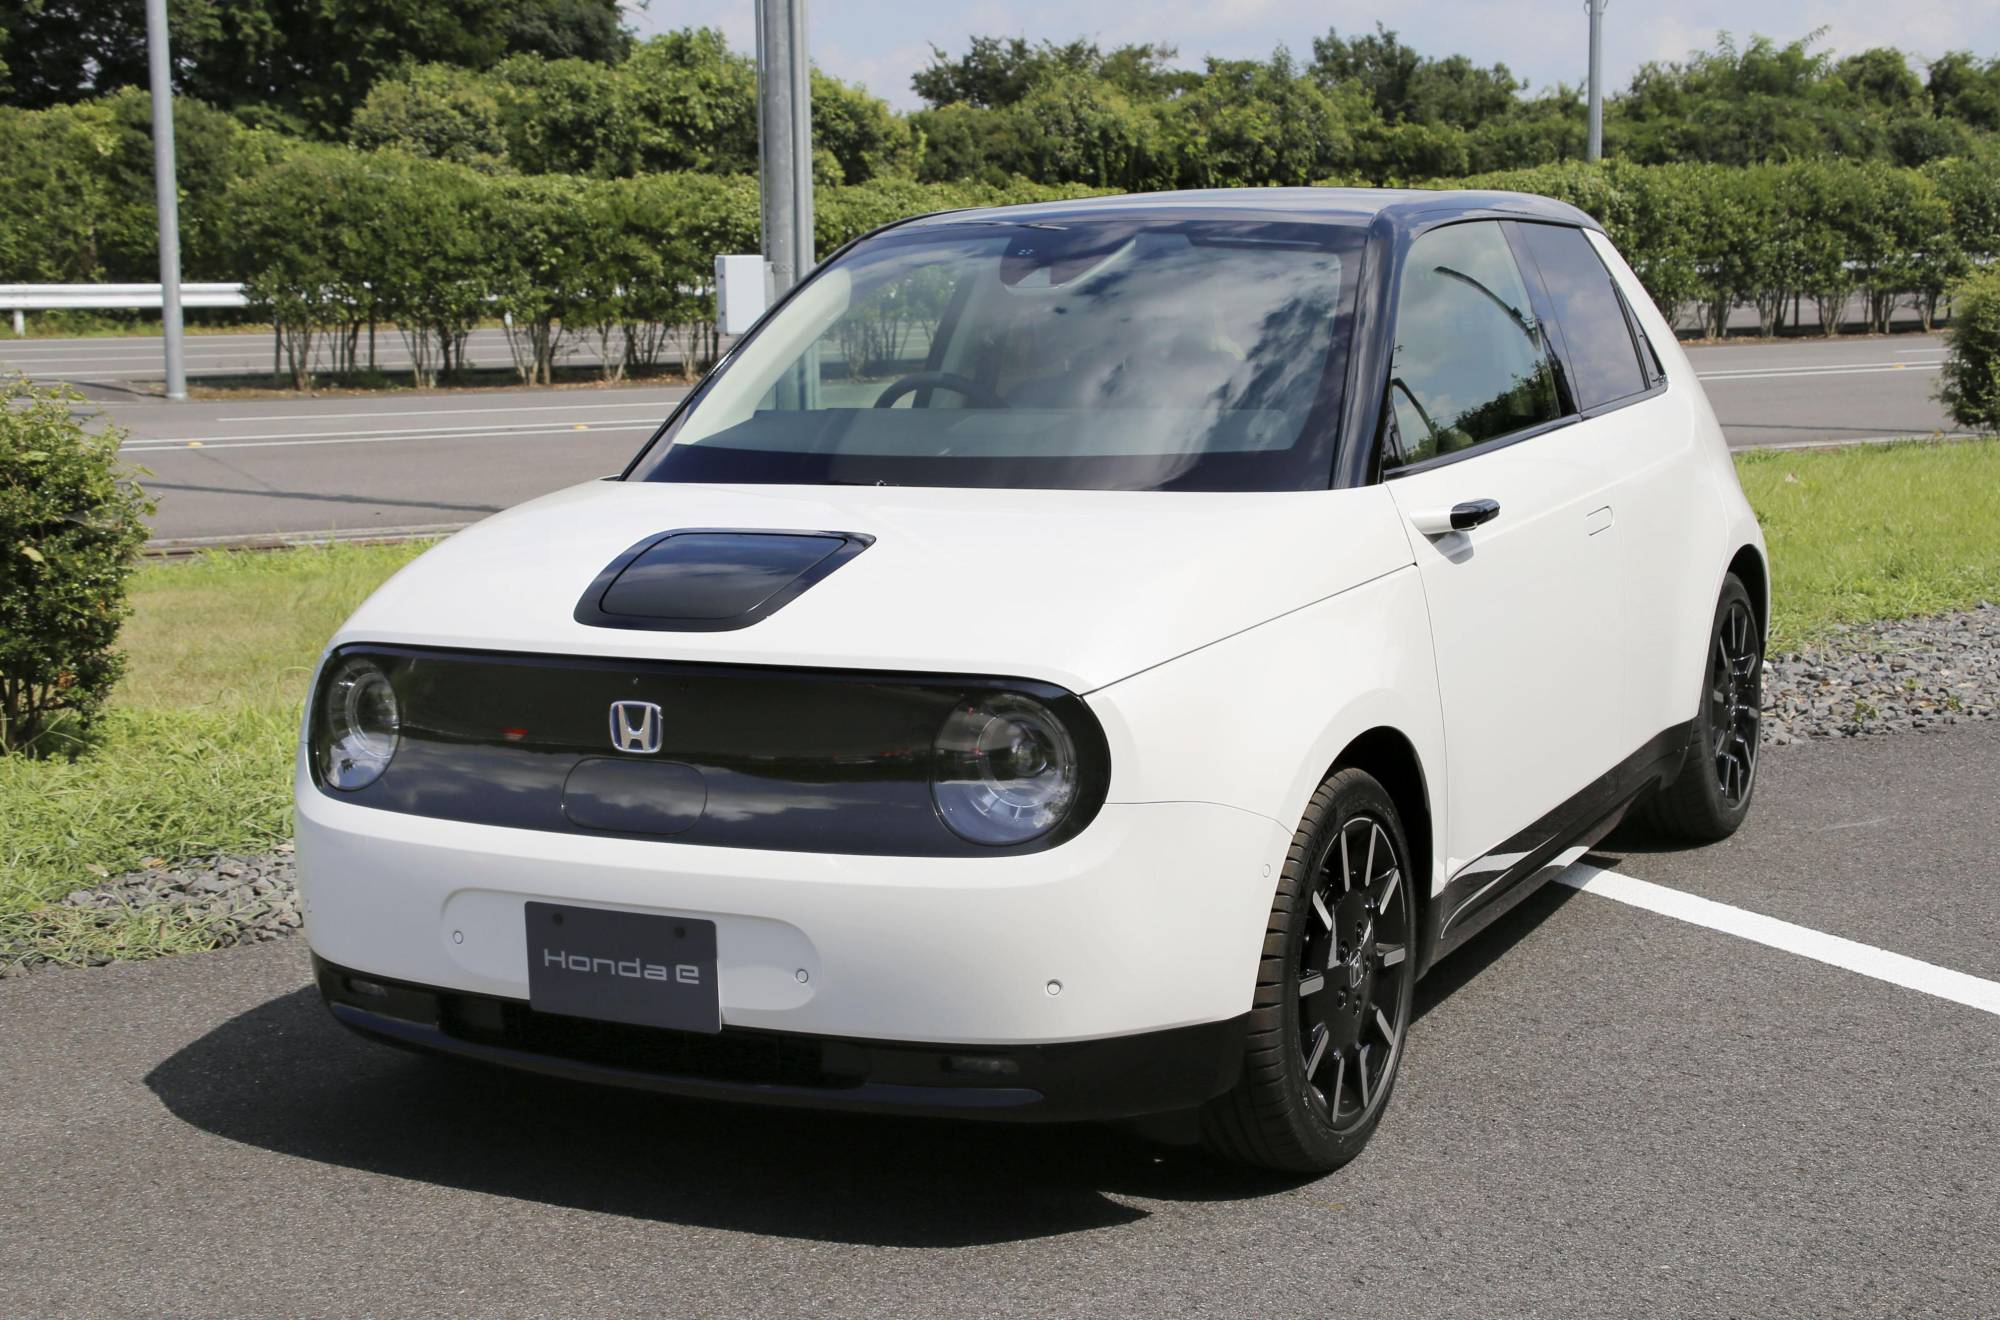 Honda in Japan's Automotive Industry